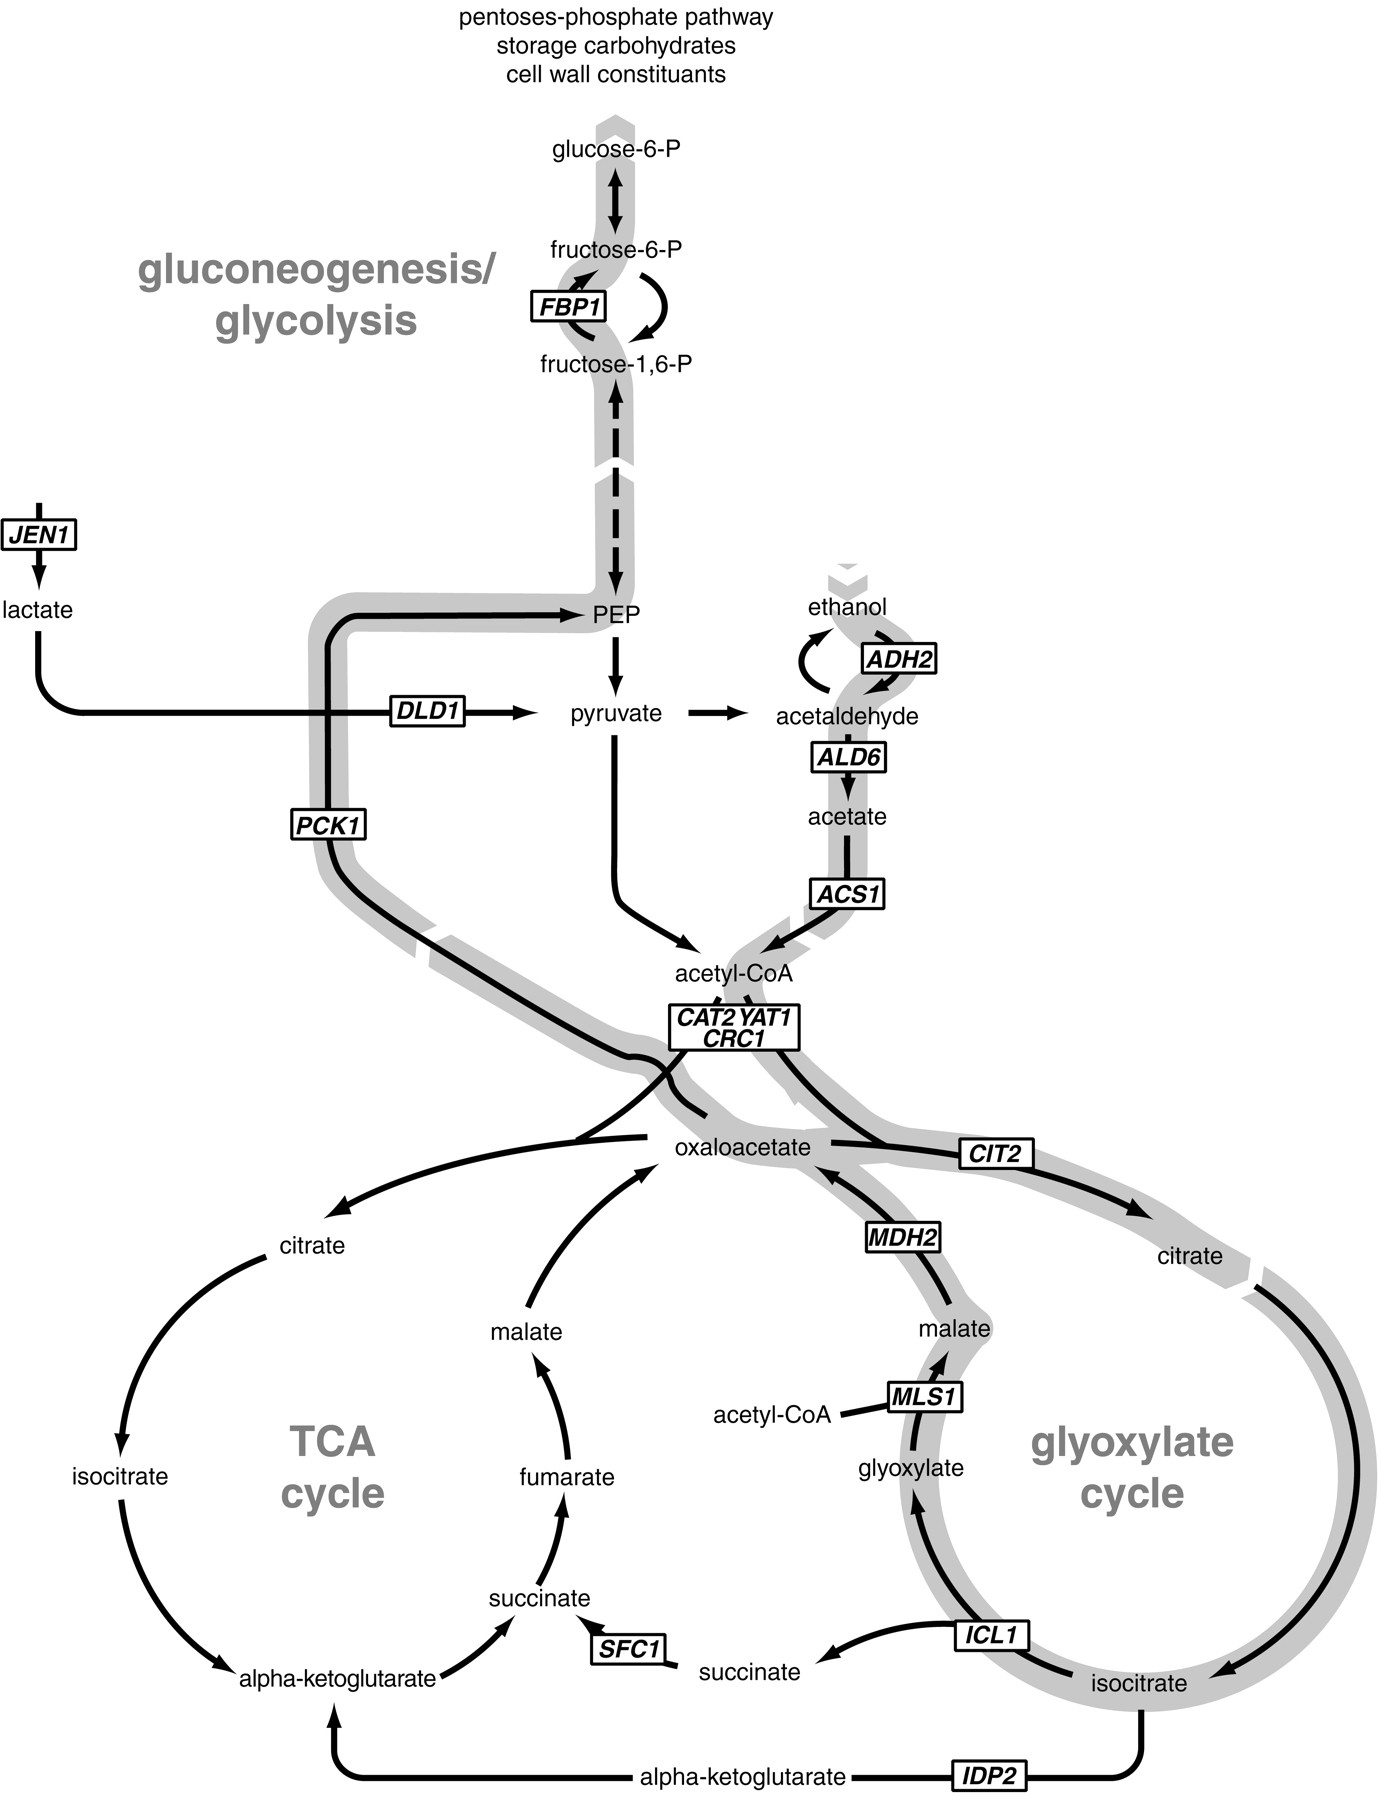 gluconeogenesis process